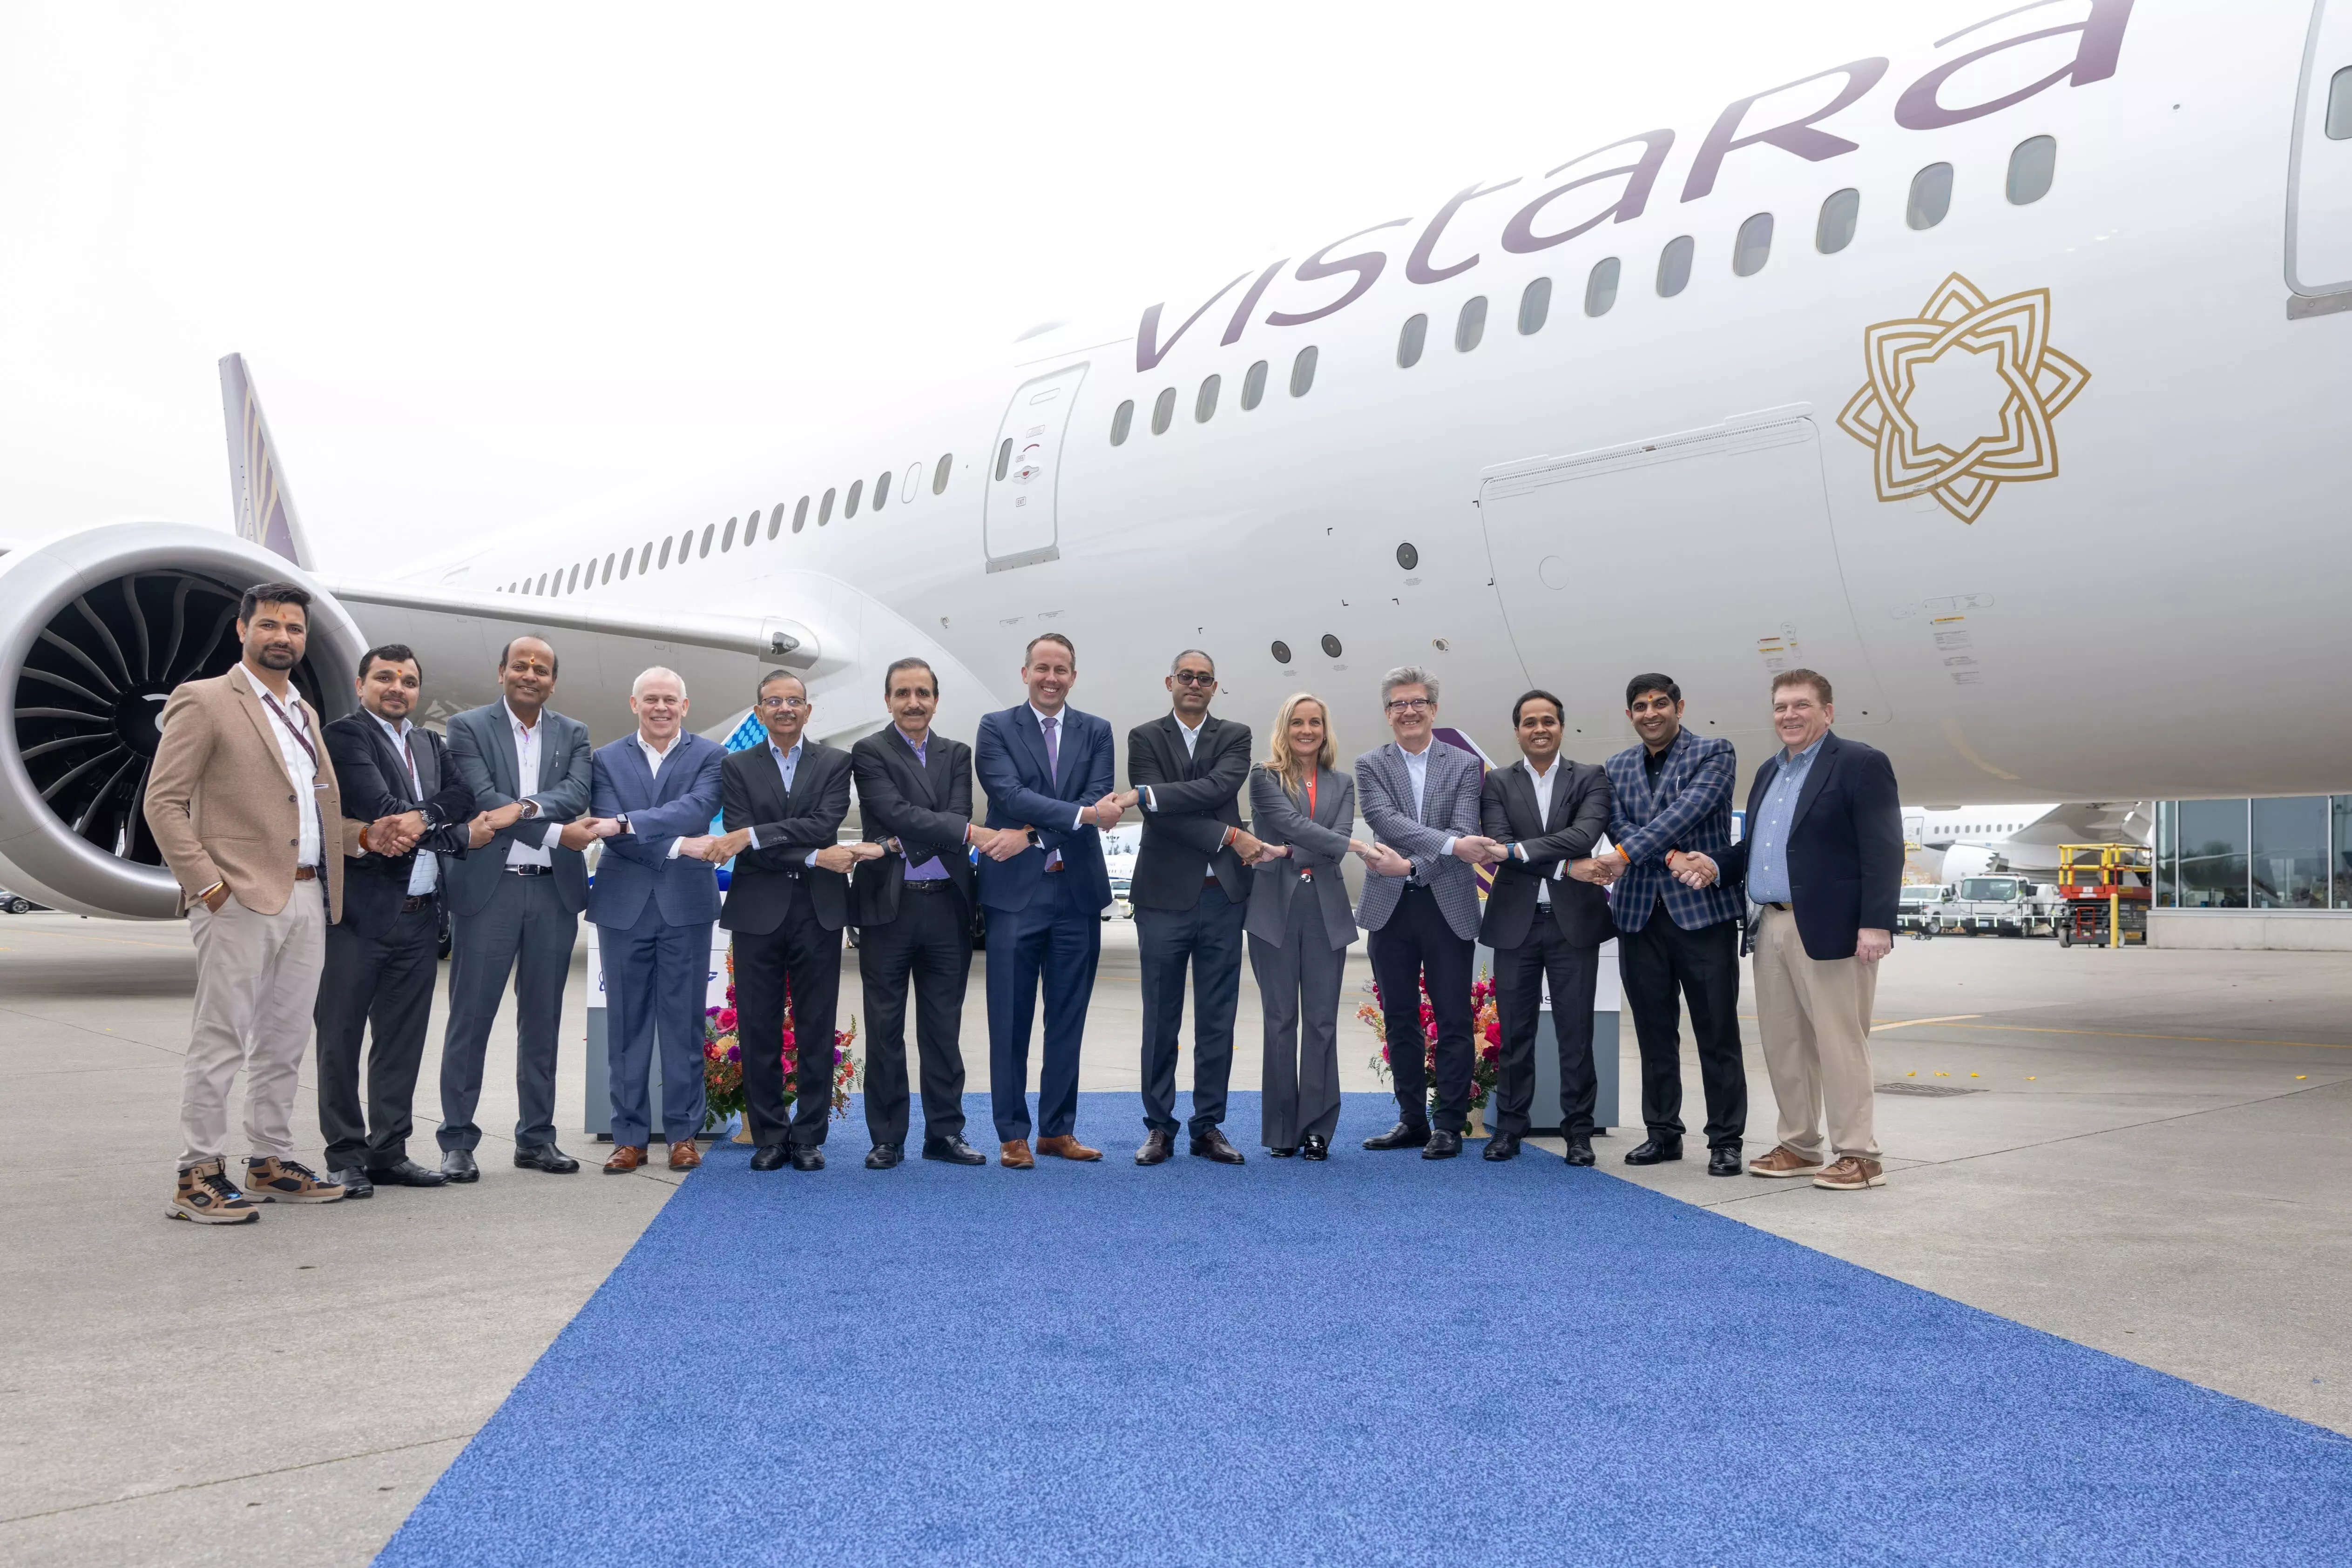 Vistara celebrates arrival of 70th aircraft & expansion of Delhi-Bali route